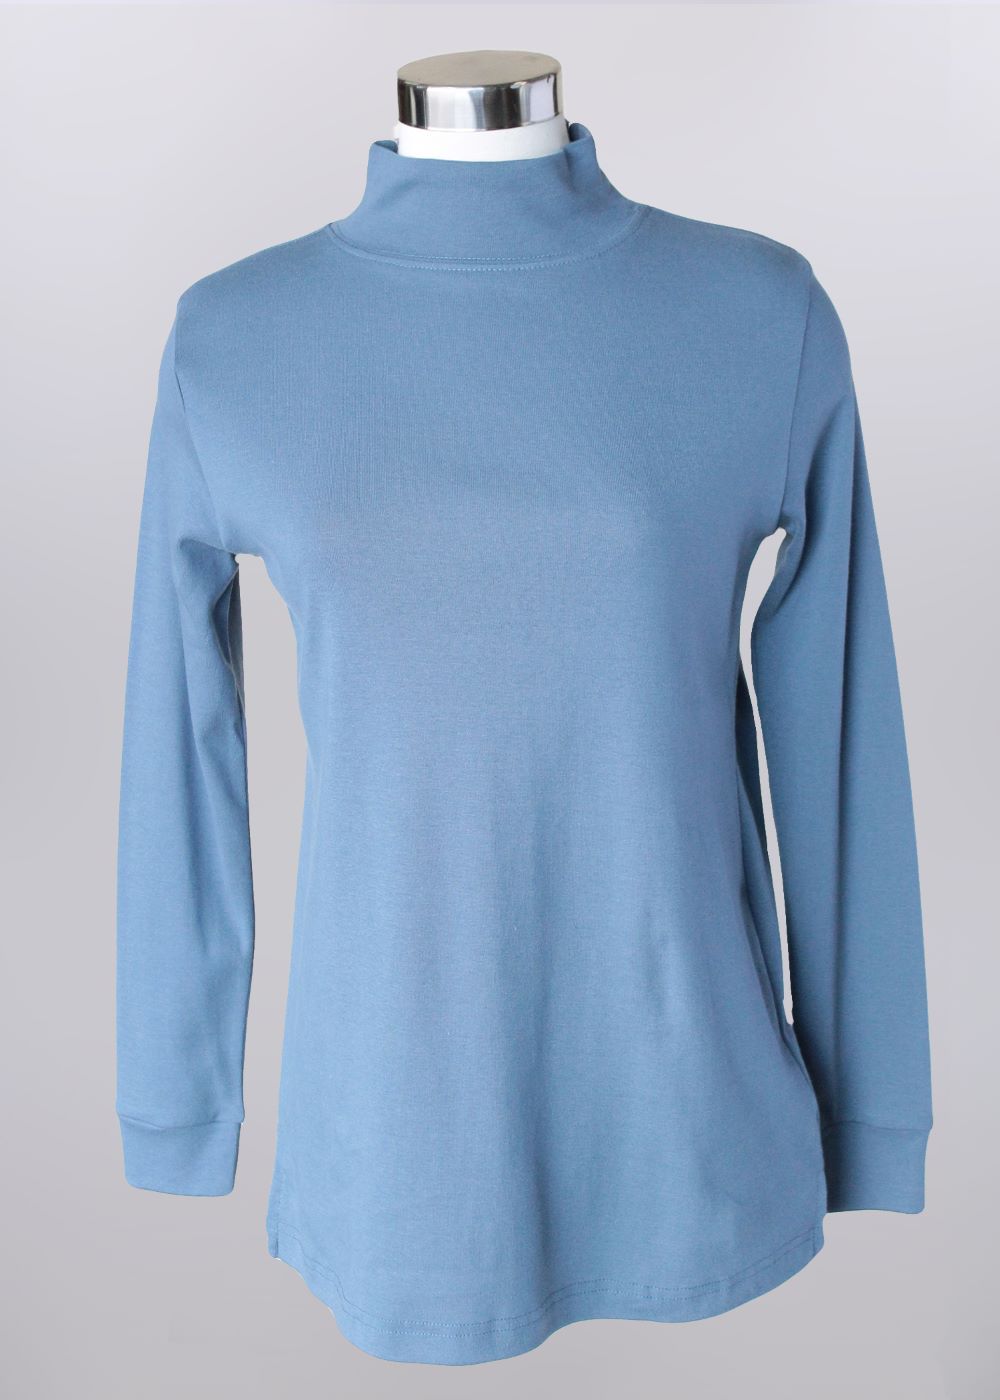 'Keren Hart' Women's Mock Neck Knit Top - Steel Blue (Ext. Sizes)